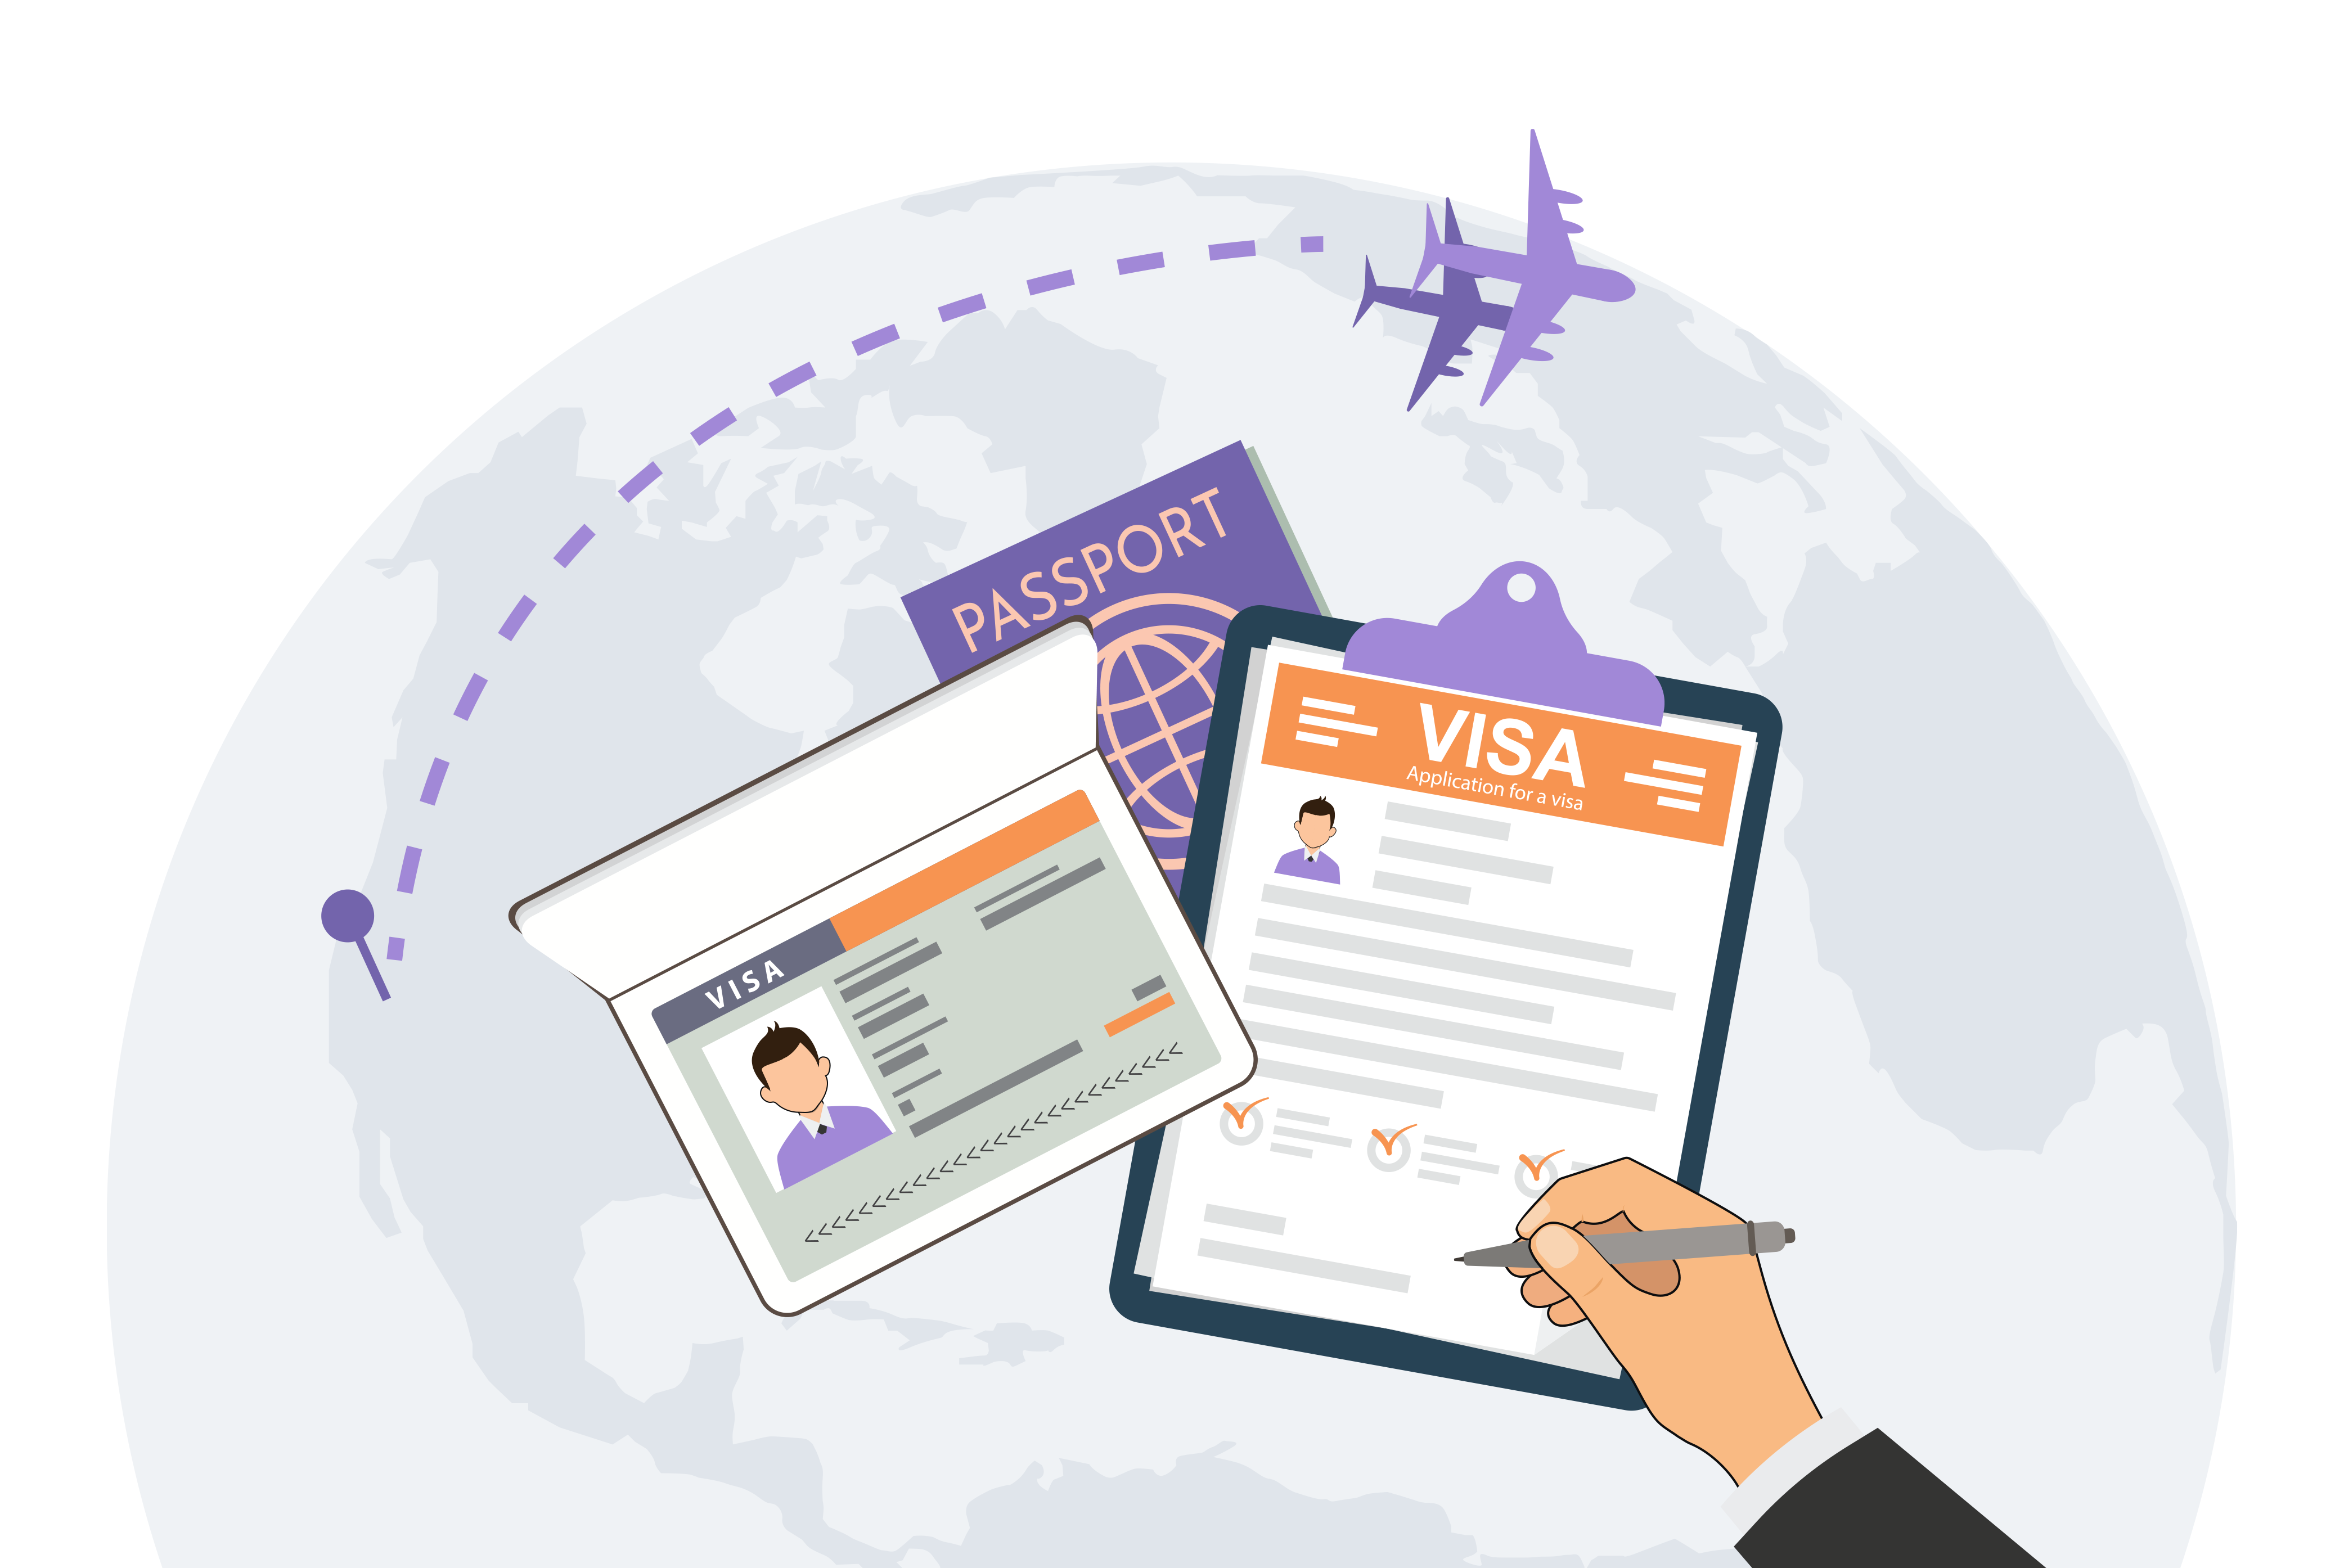 international work visas jobs